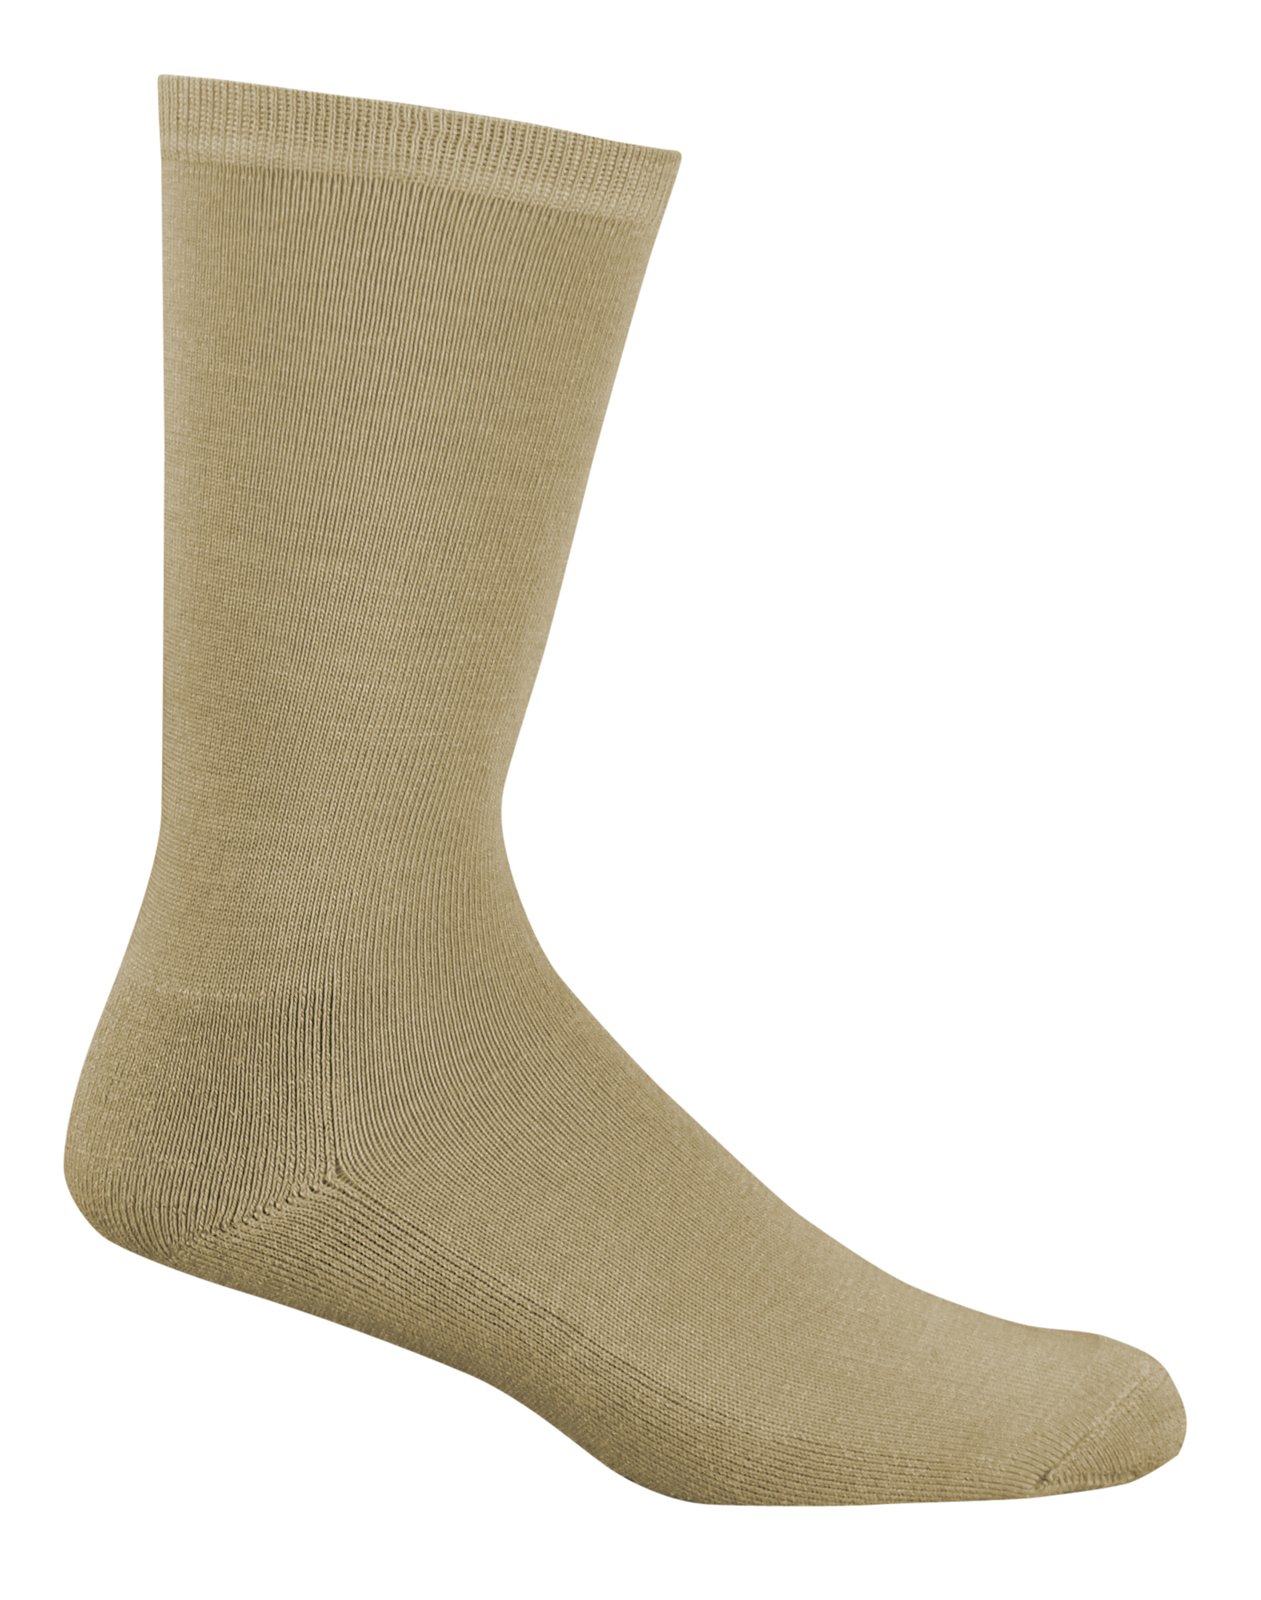 Comfort Business Socks